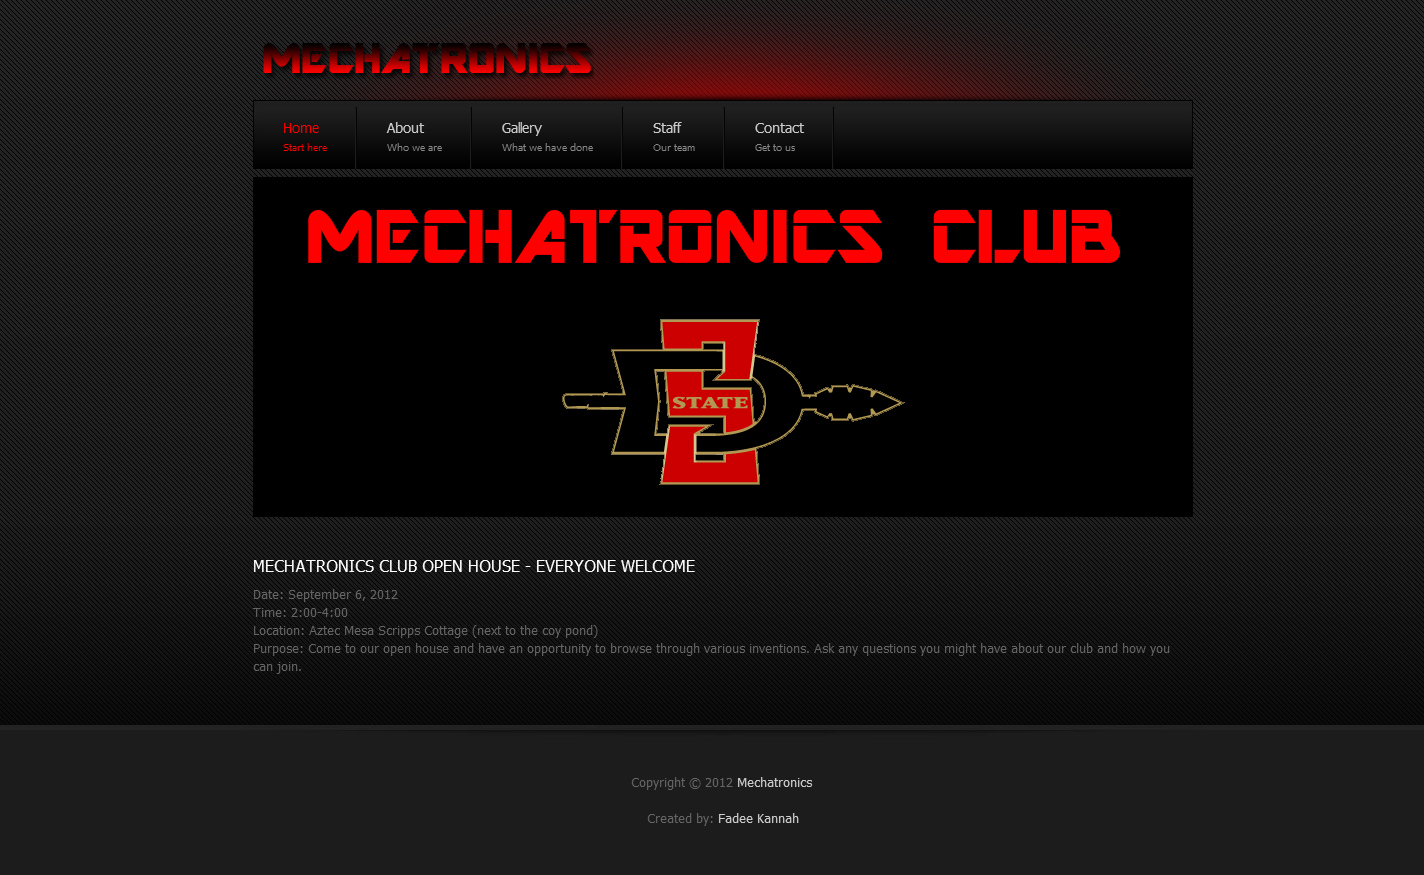 SDSU's MechaTronics Club